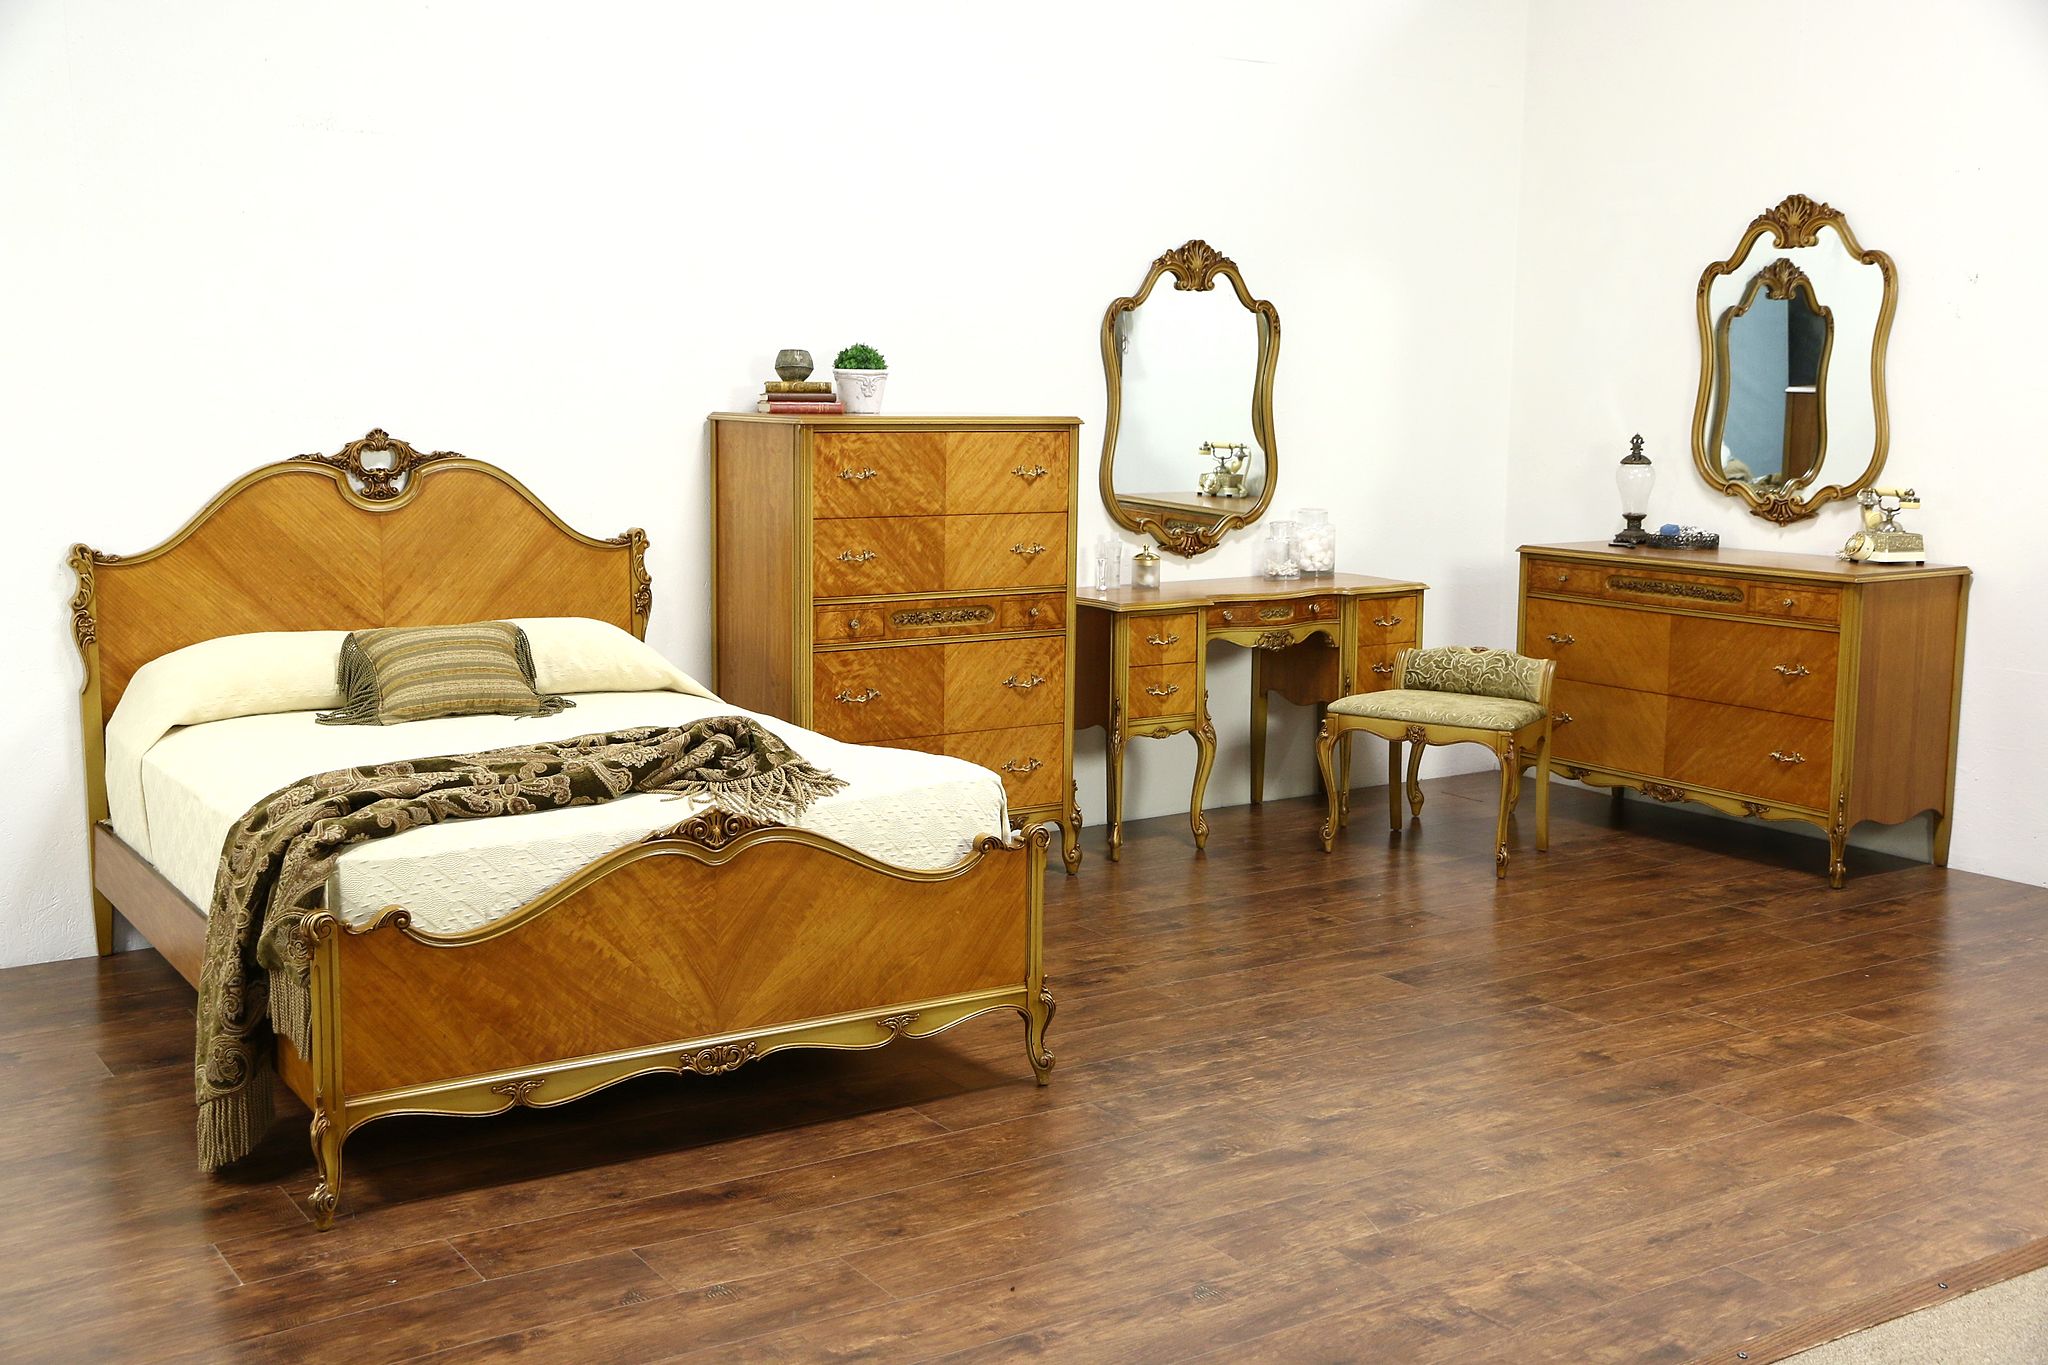 1940 willet bedroom furniture